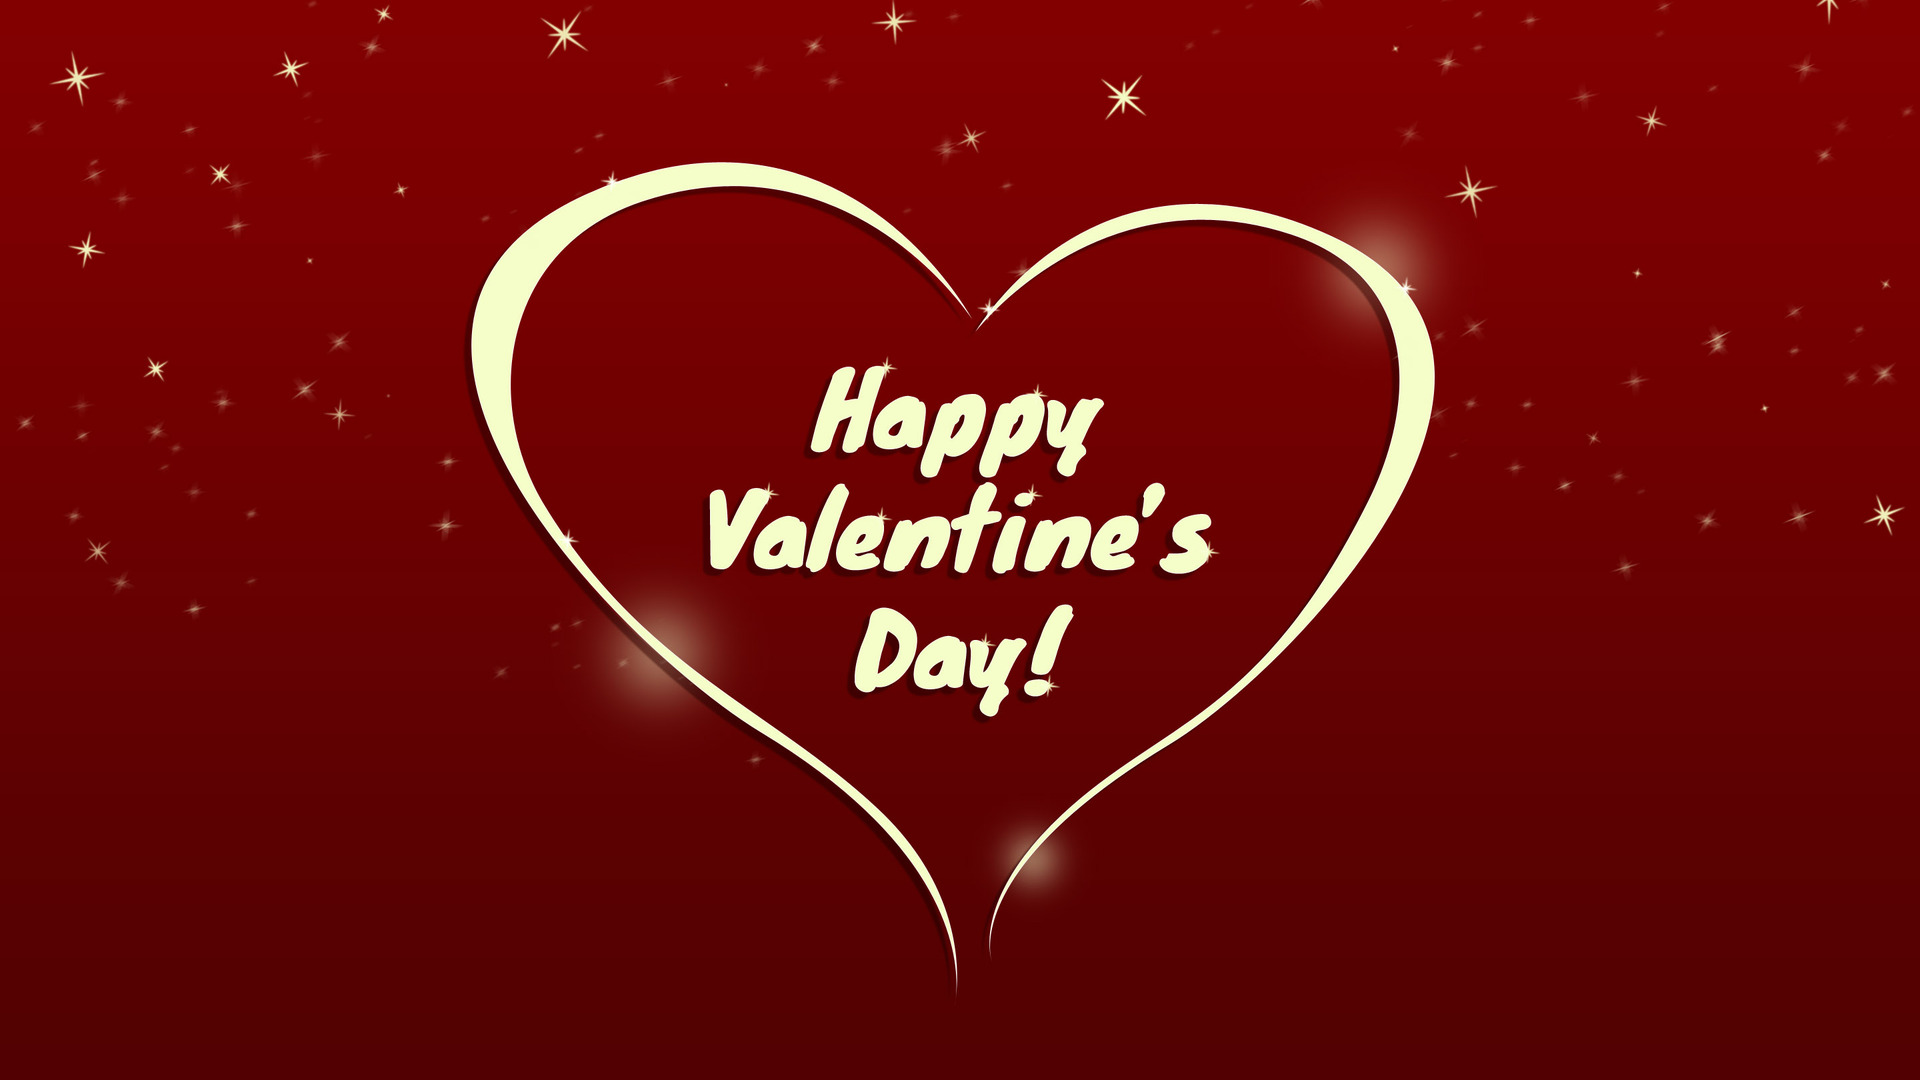 happy valentine day wallpaper hd,heart,red,text,love,valentine's day